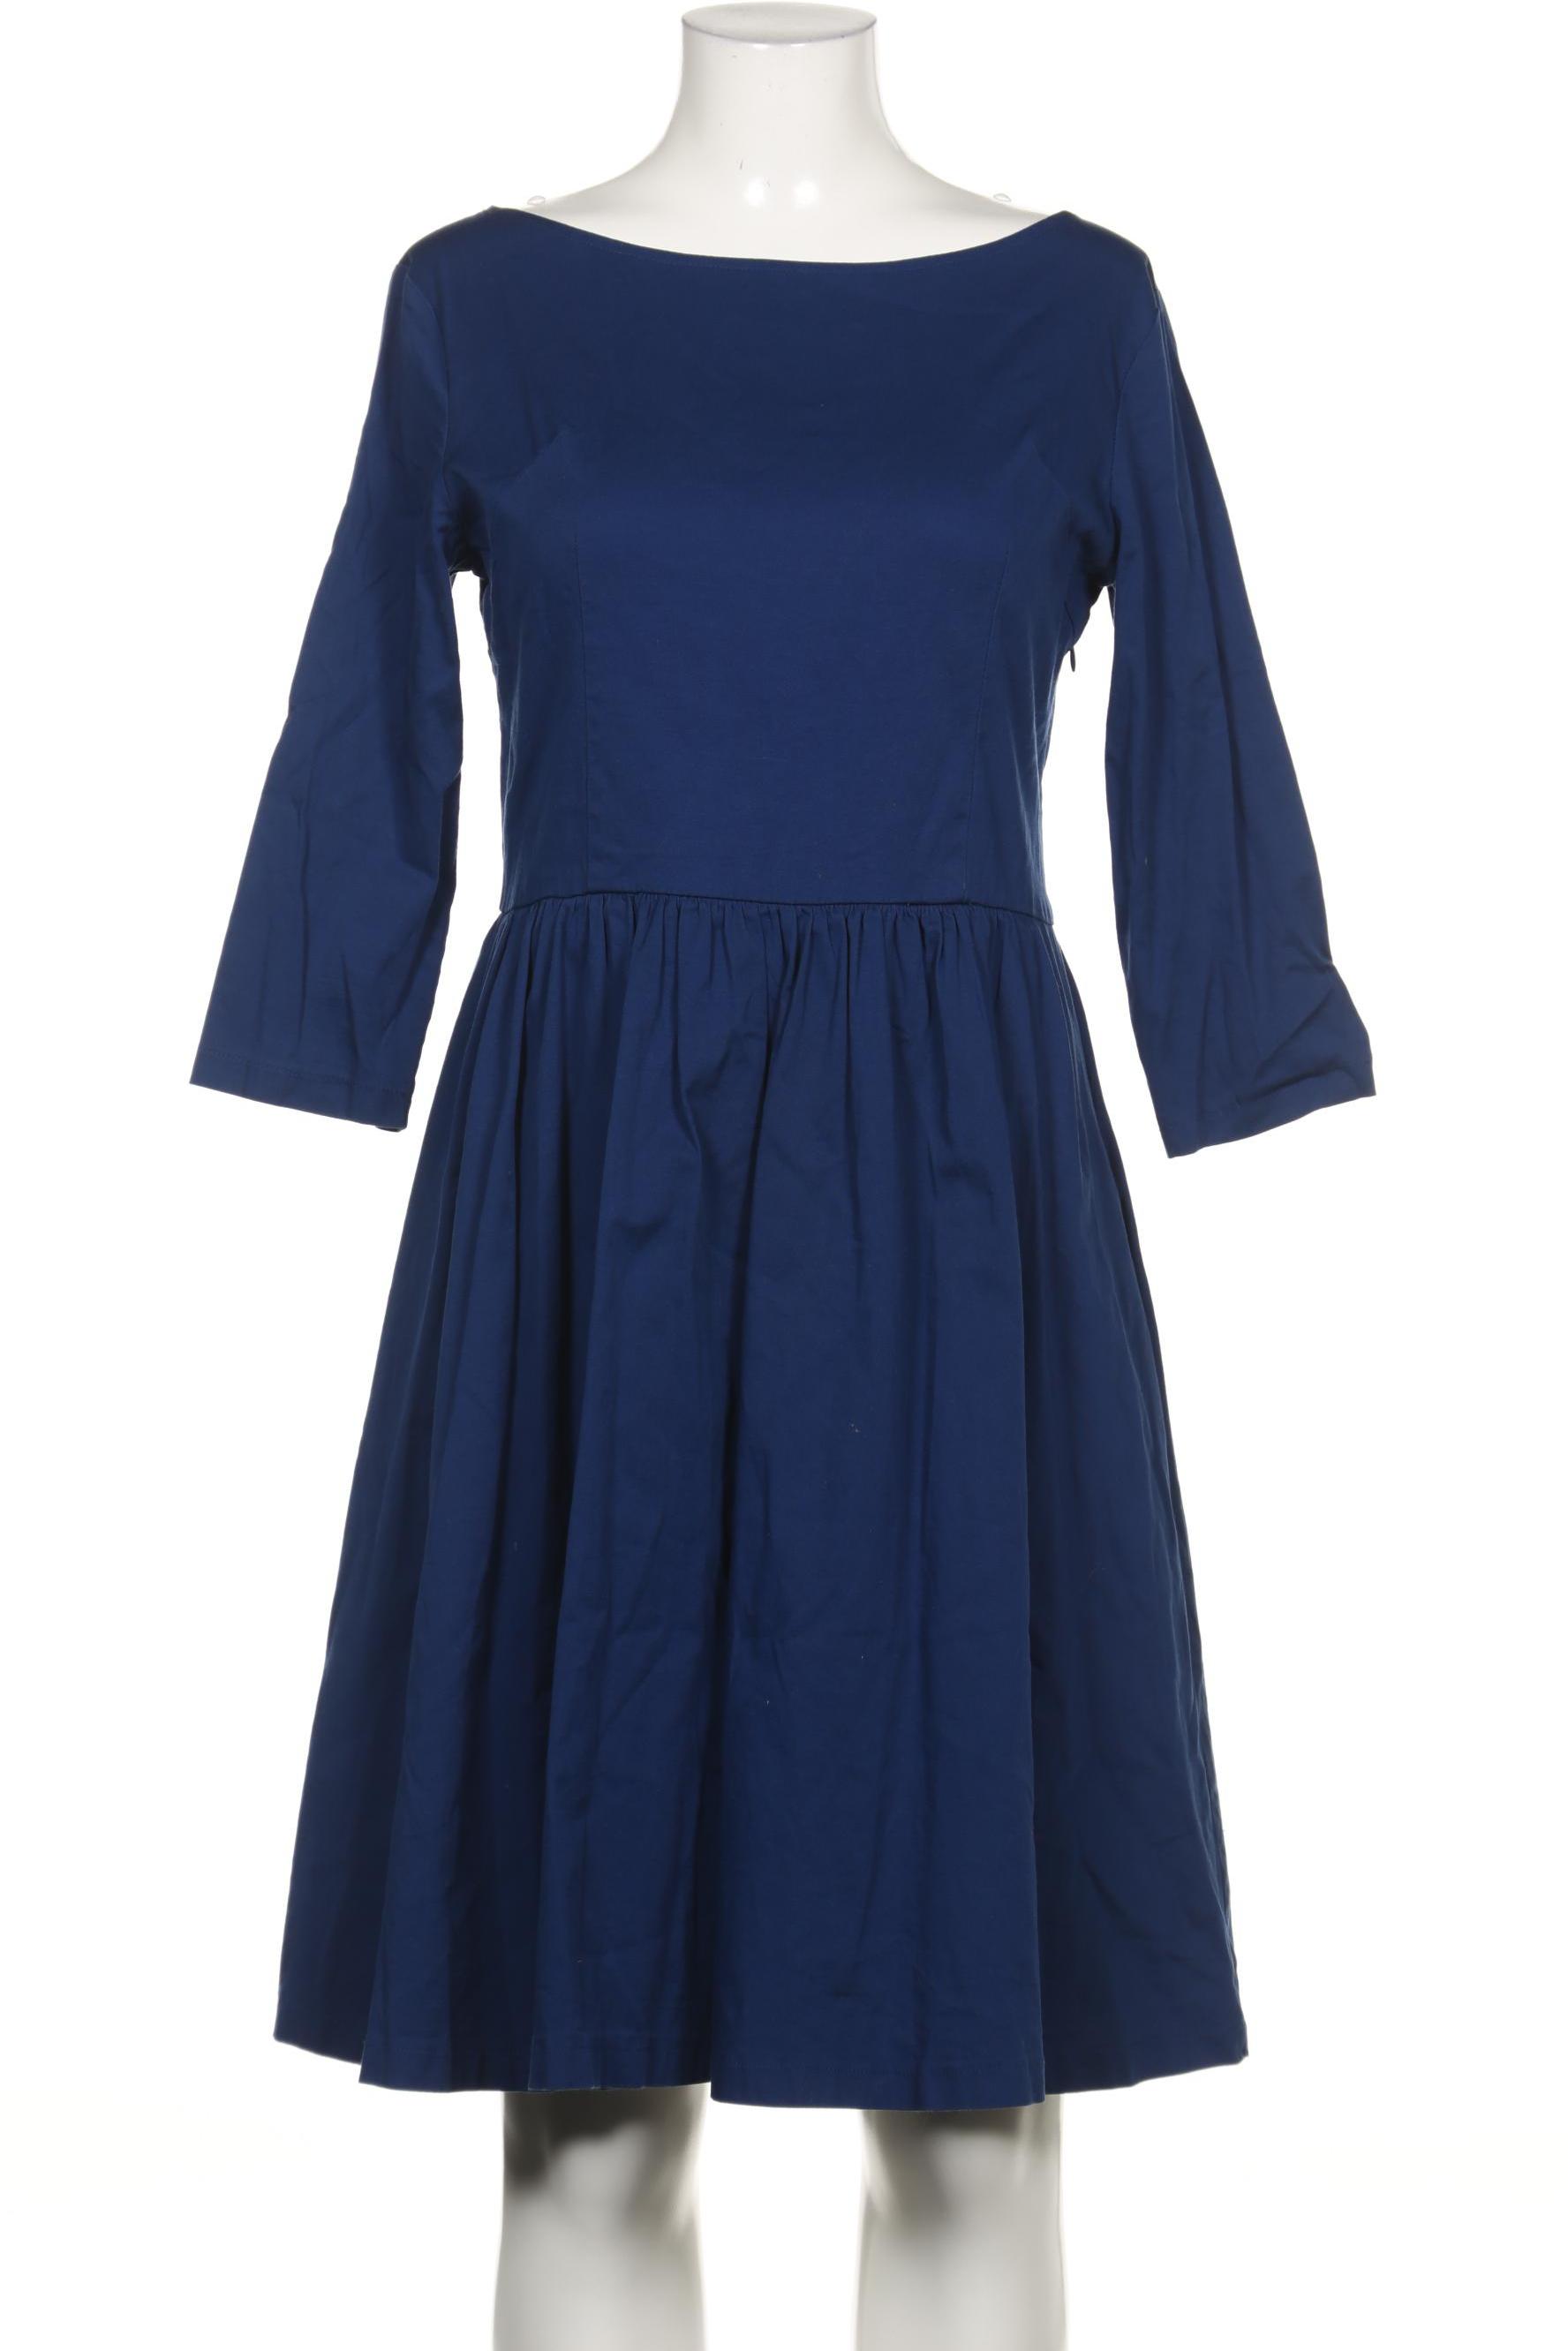 Lindy Bop Damen Kleid, blau, Gr. 38 von lindy bop